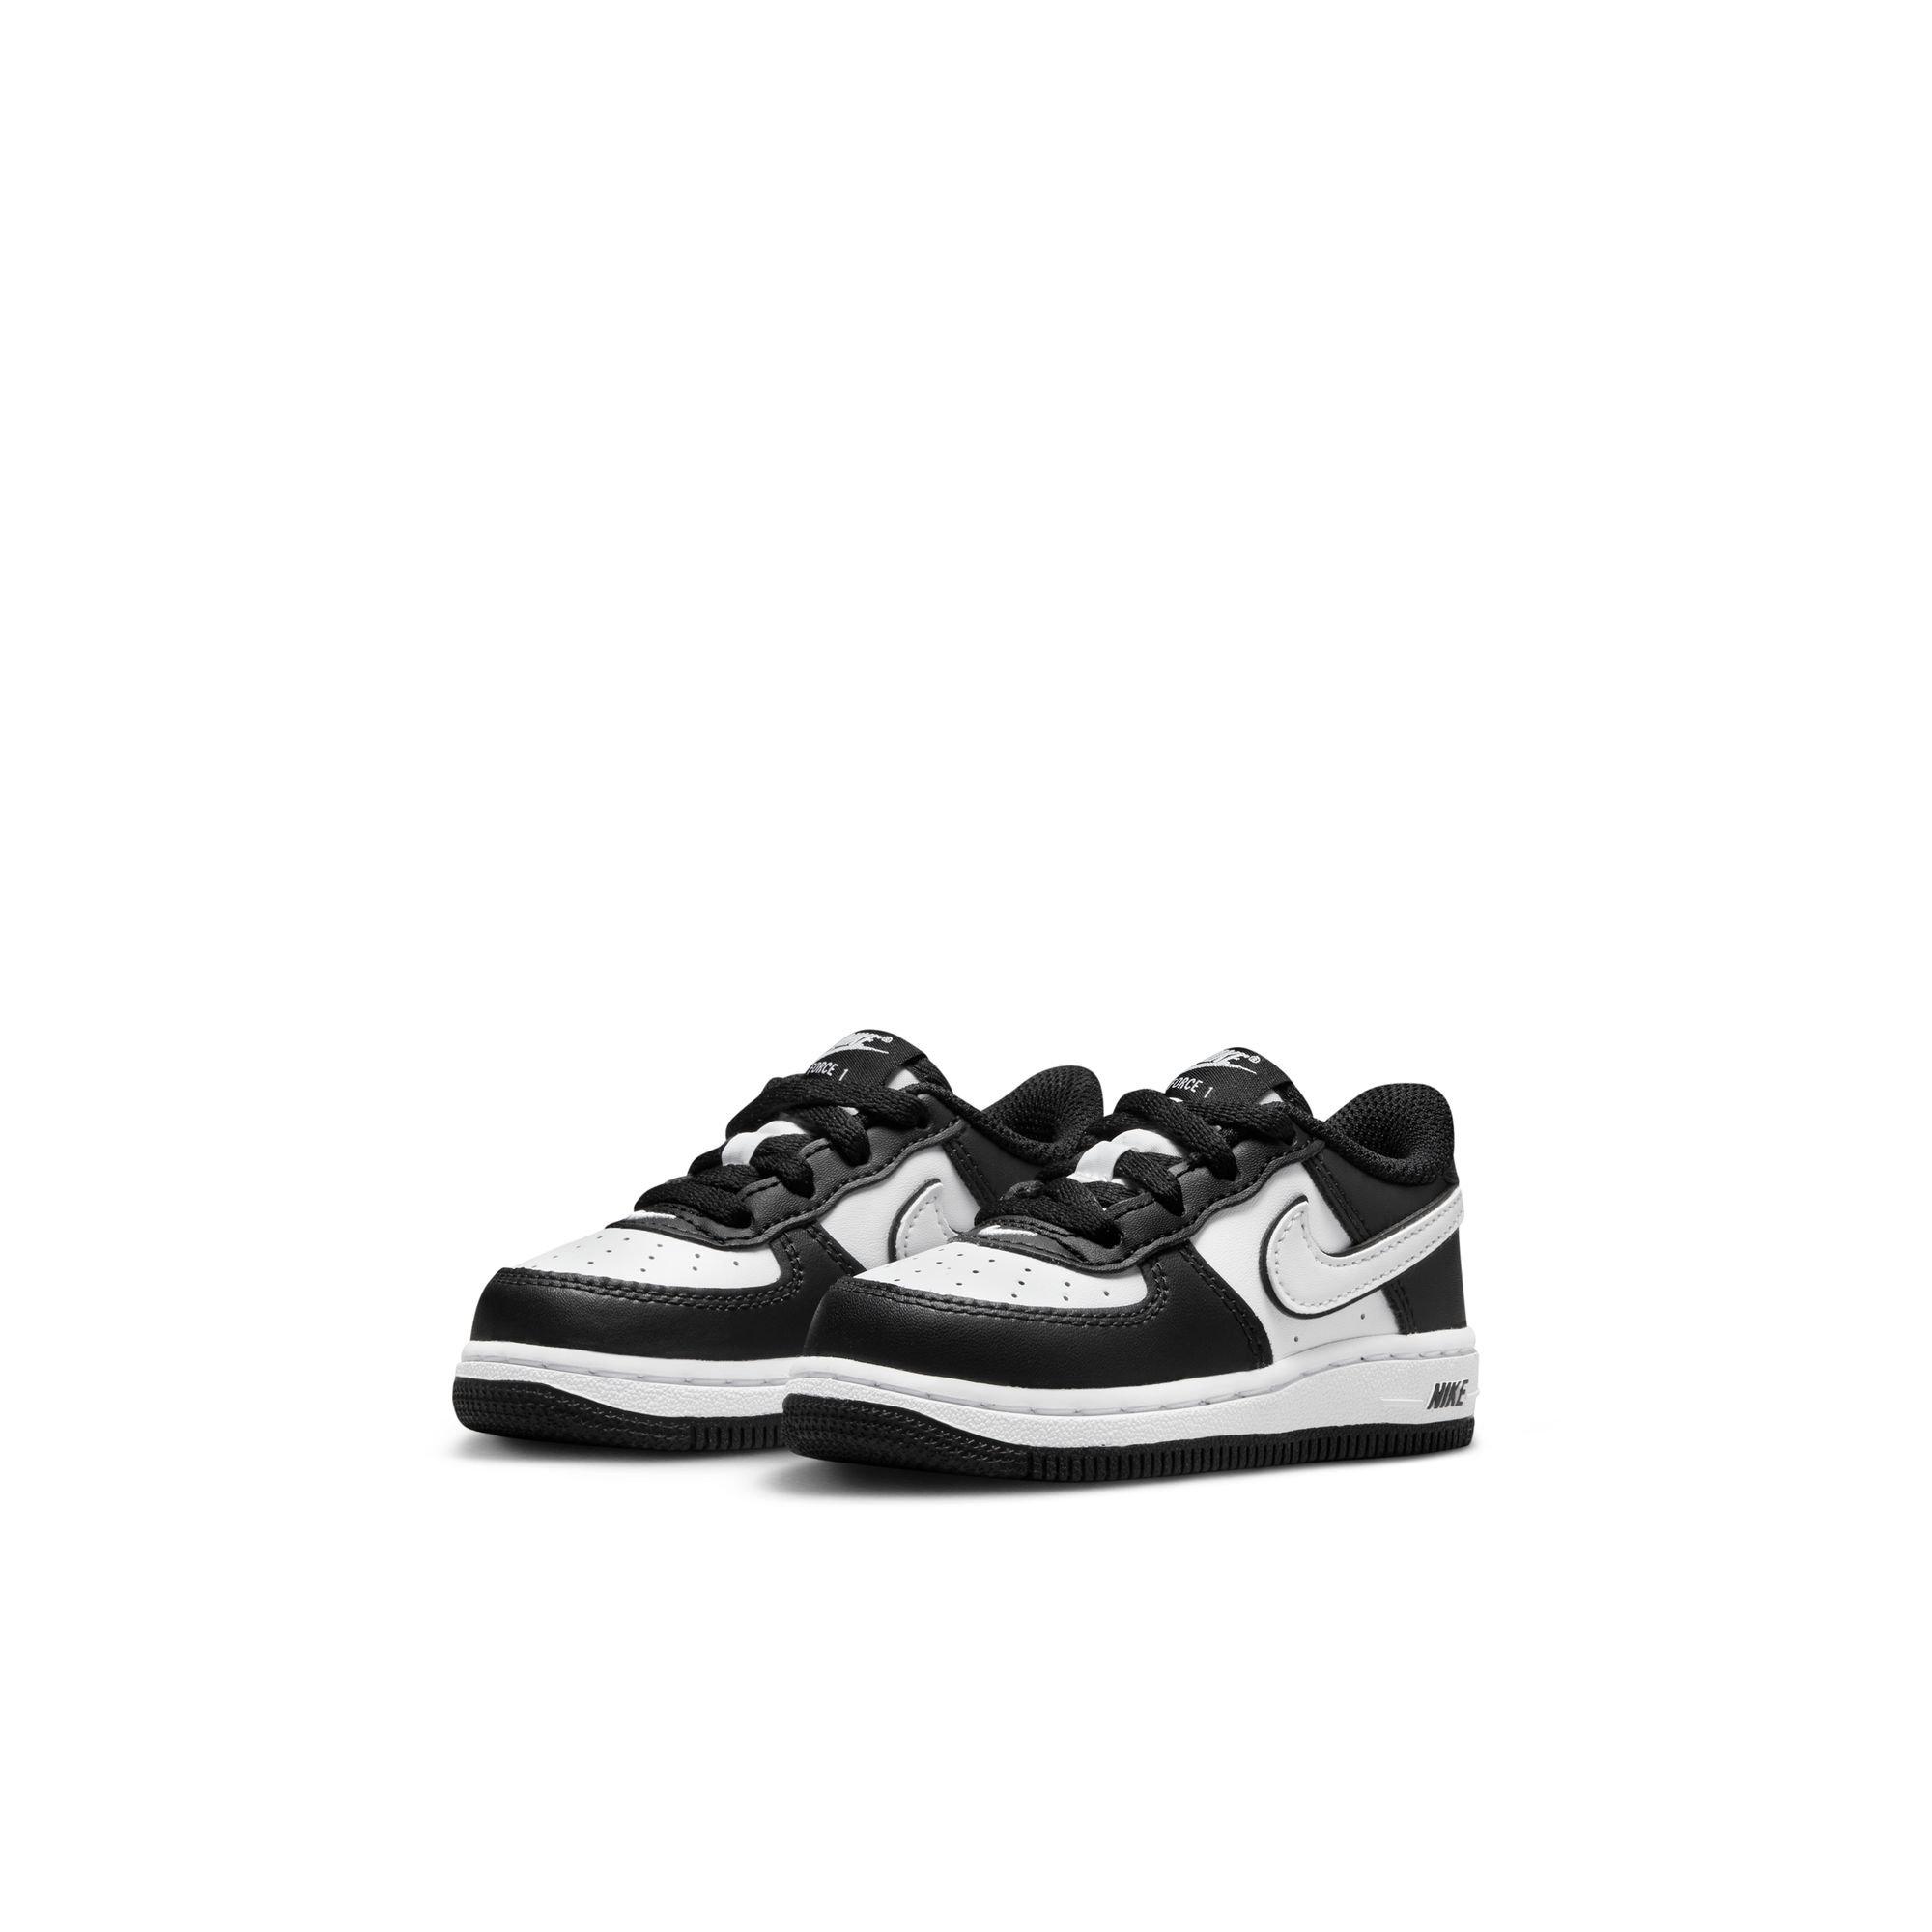 Nike Force 1 LV8 2 "White/Black" (TD) Toddler's 10c- BQ8275  100